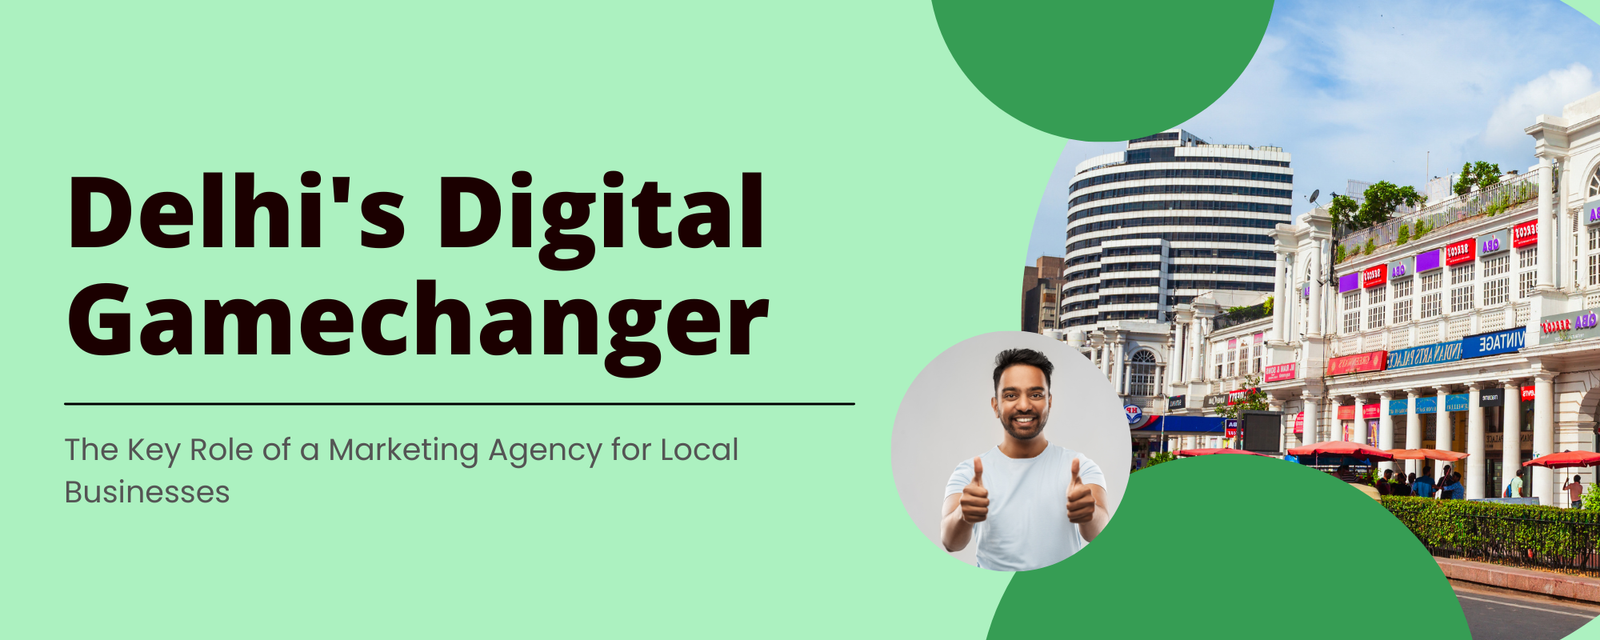 Digital Marketing Agency in delhi